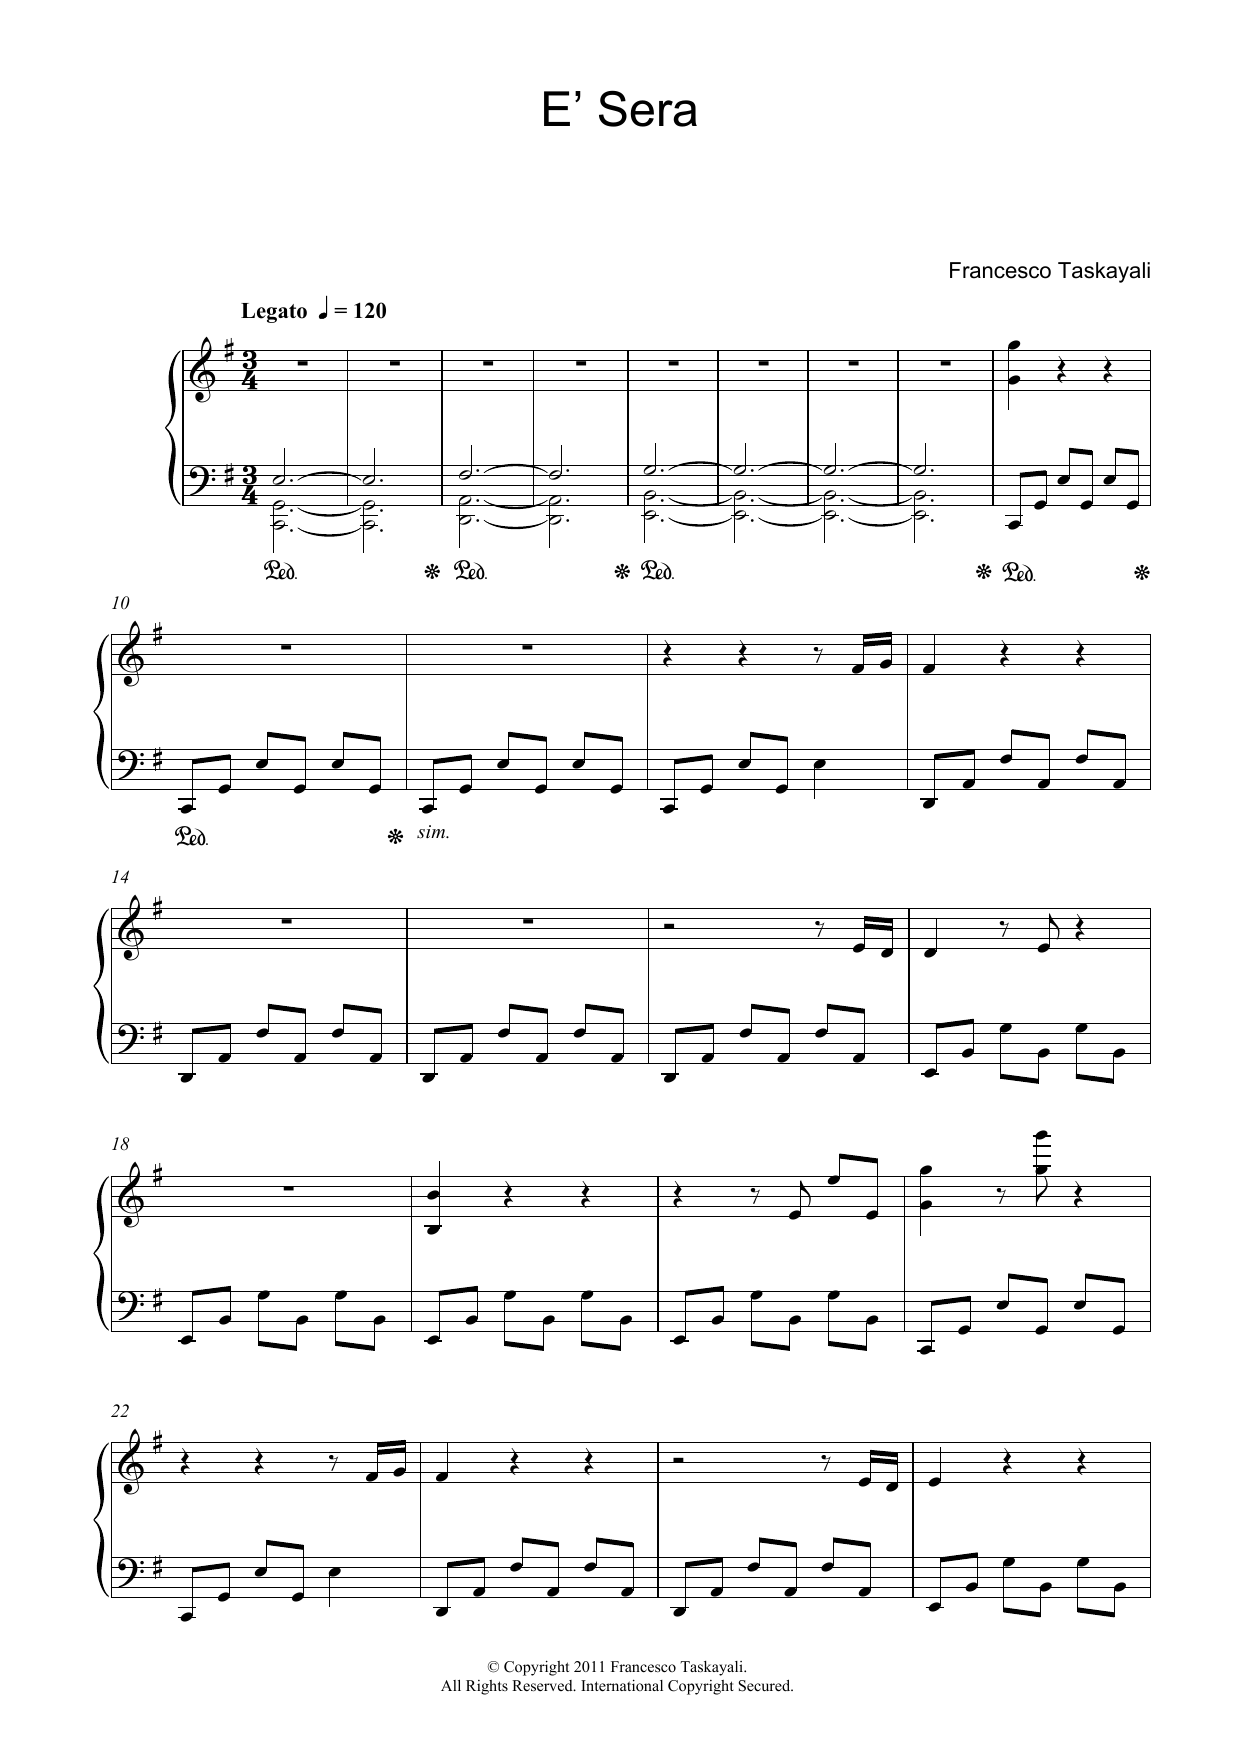 Francesco Taskayali E' Sera sheet music notes and chords arranged for Piano Solo